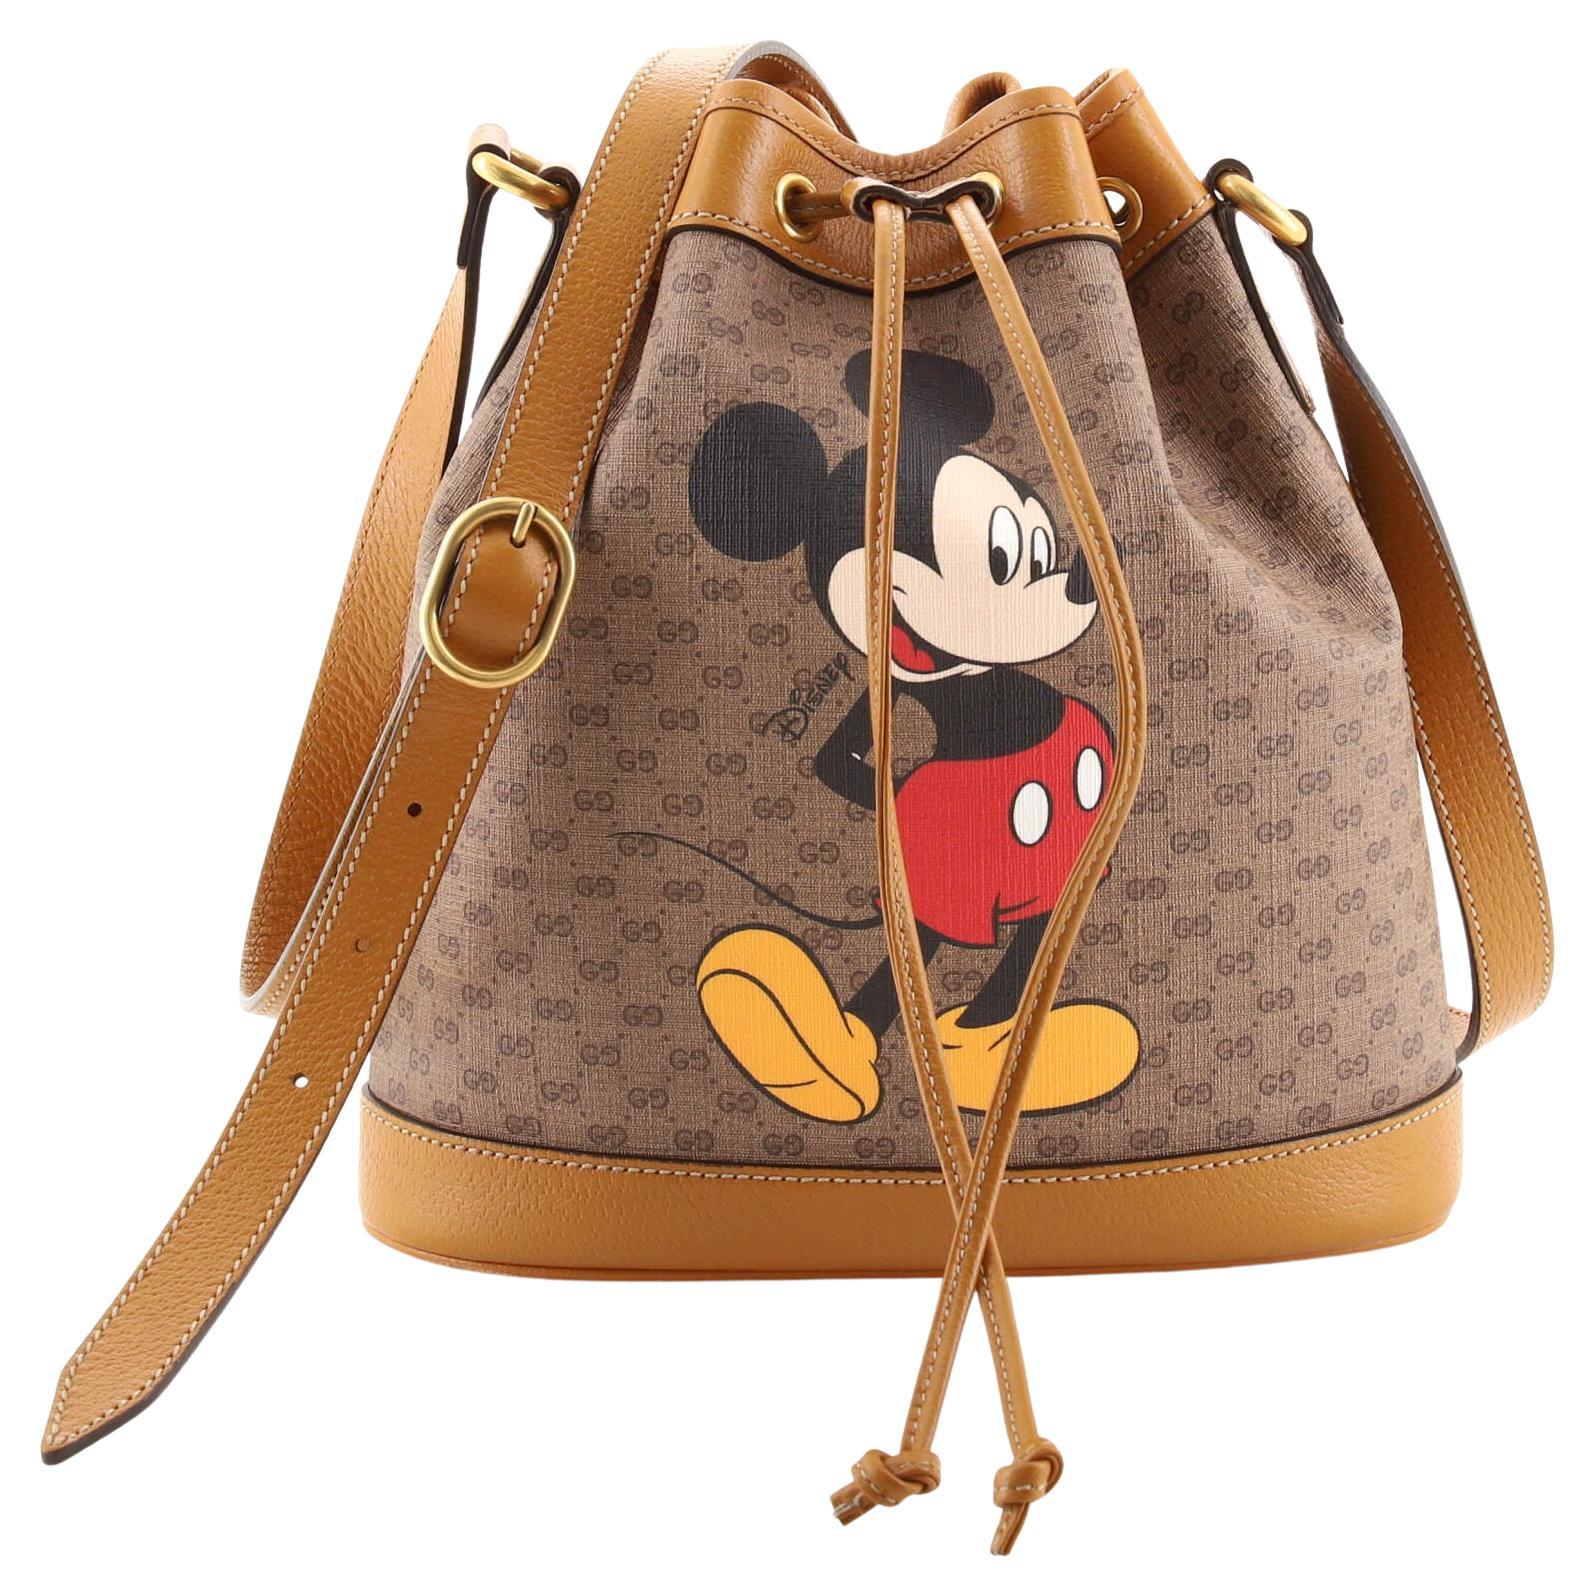 Mickey Mouse Bag - 5 For Sale on 1stDibs